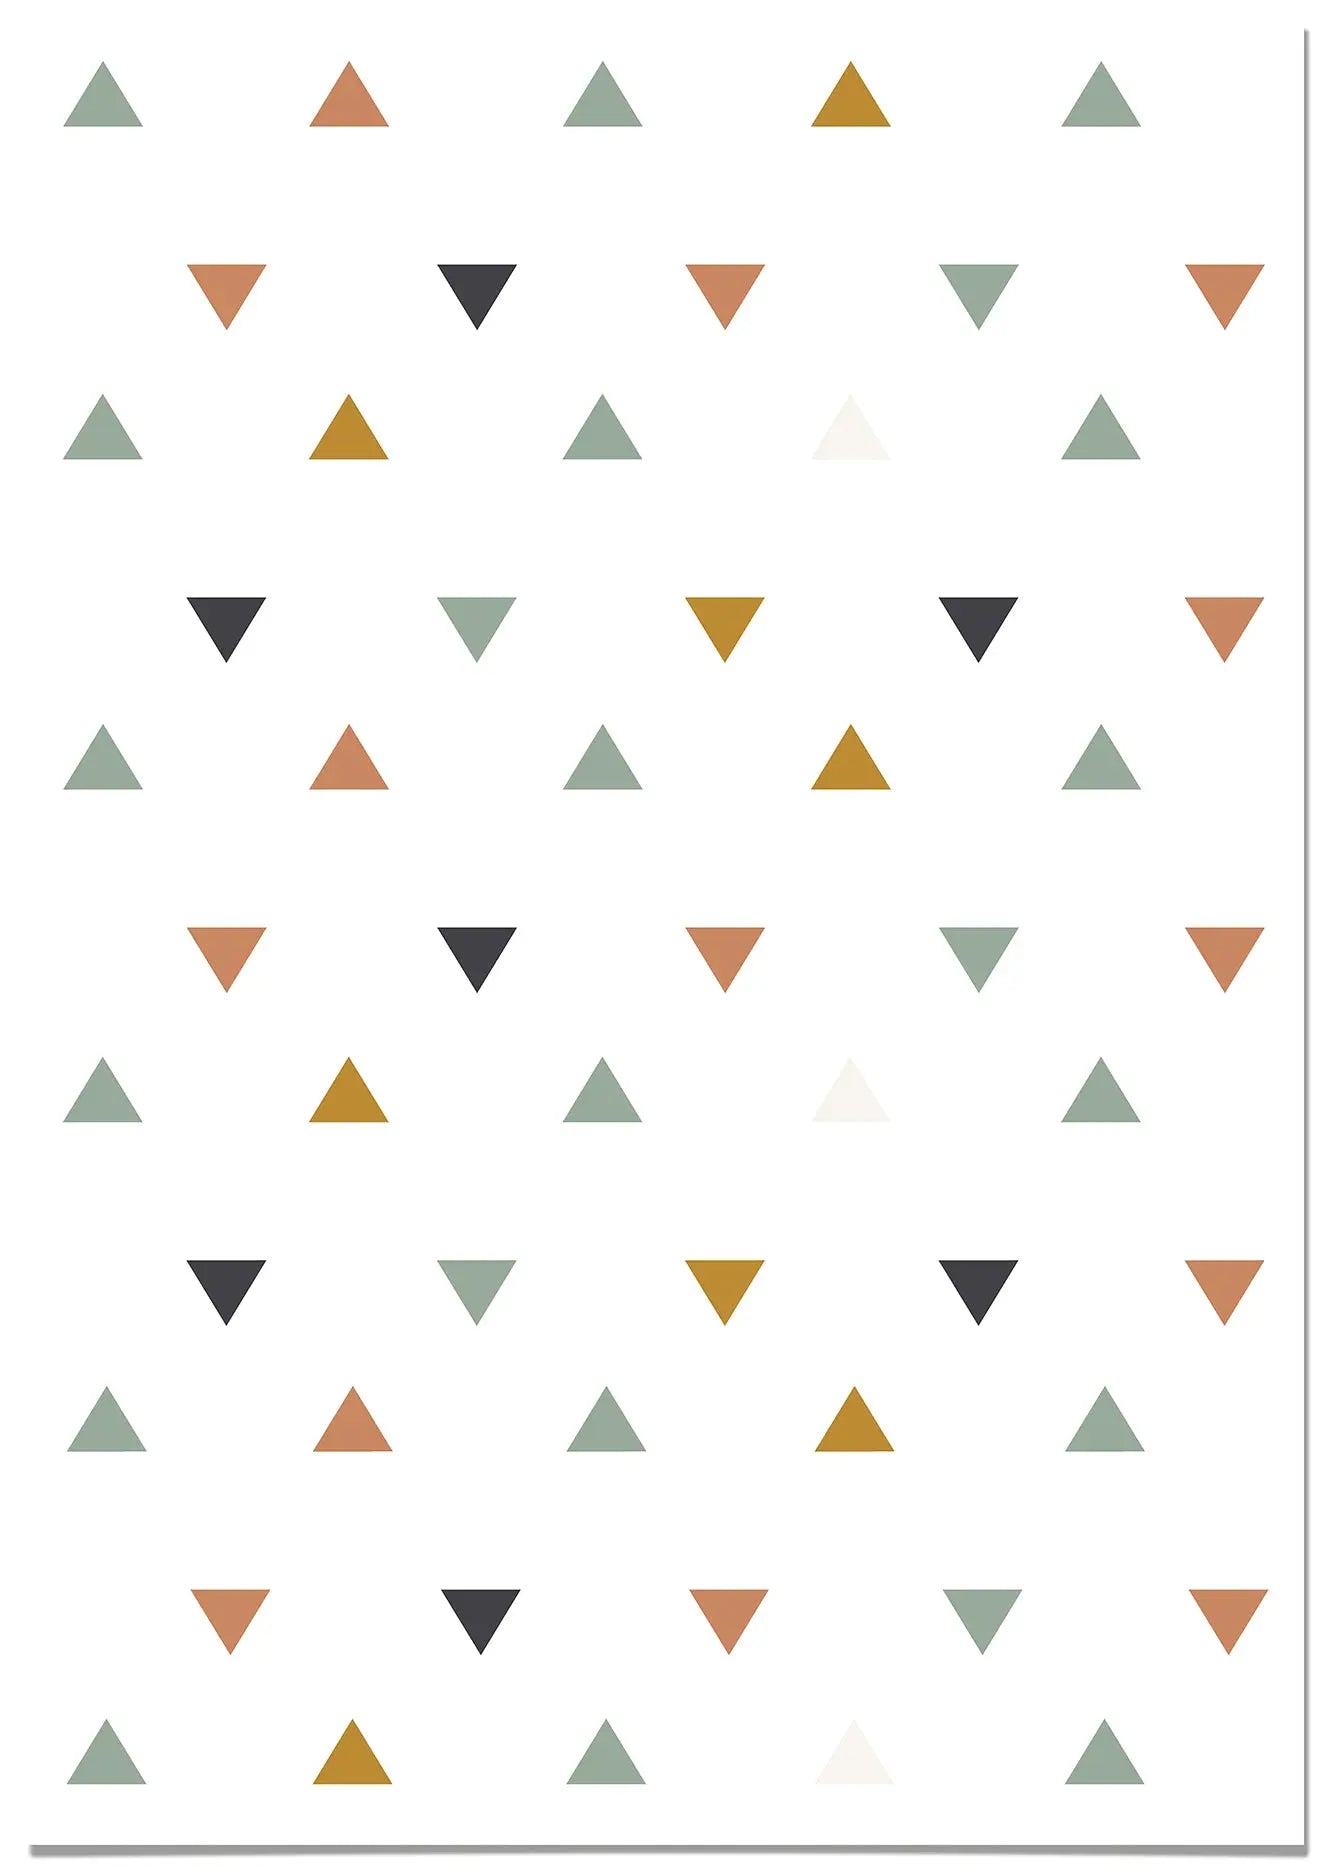 Vinilo Adhesivo Muebles Triángulos Colores 66 x 100 cm freeshipping - Home and Living